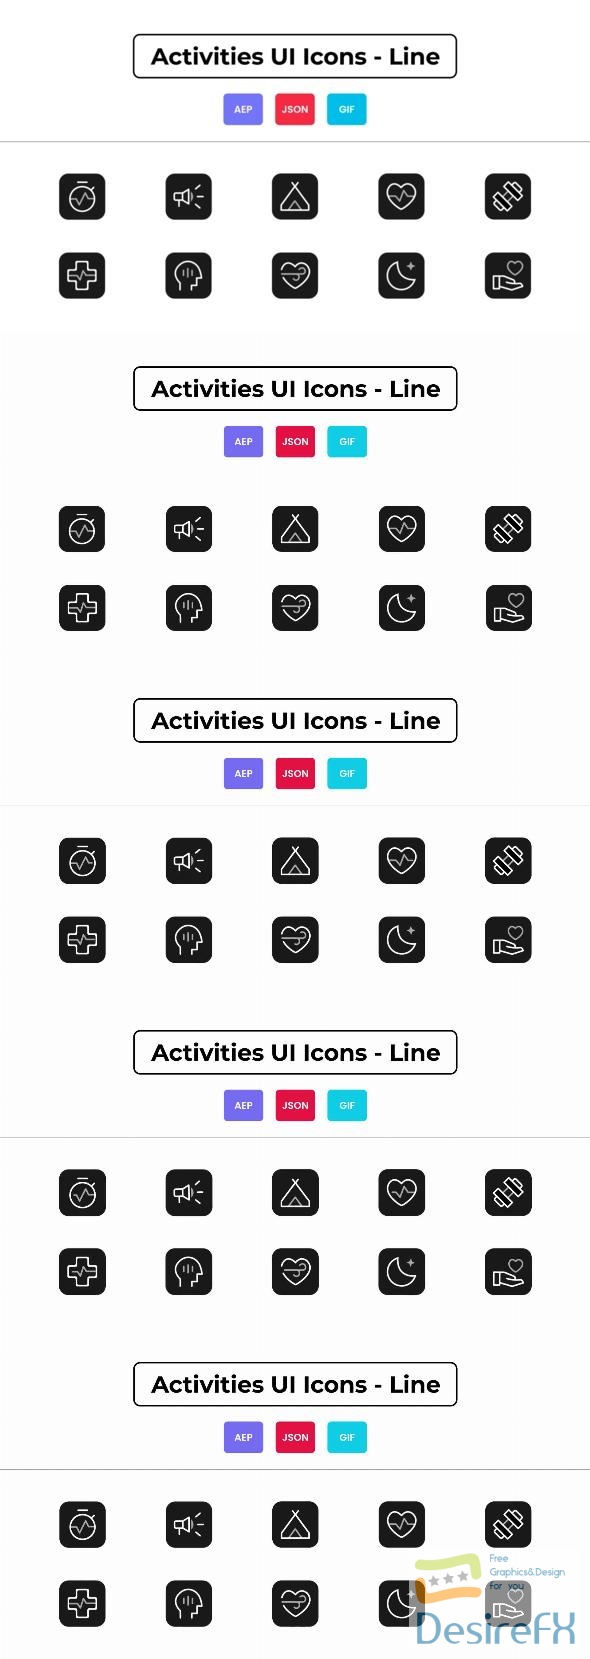 VideoHive Activities UI Icons - Line 44577066